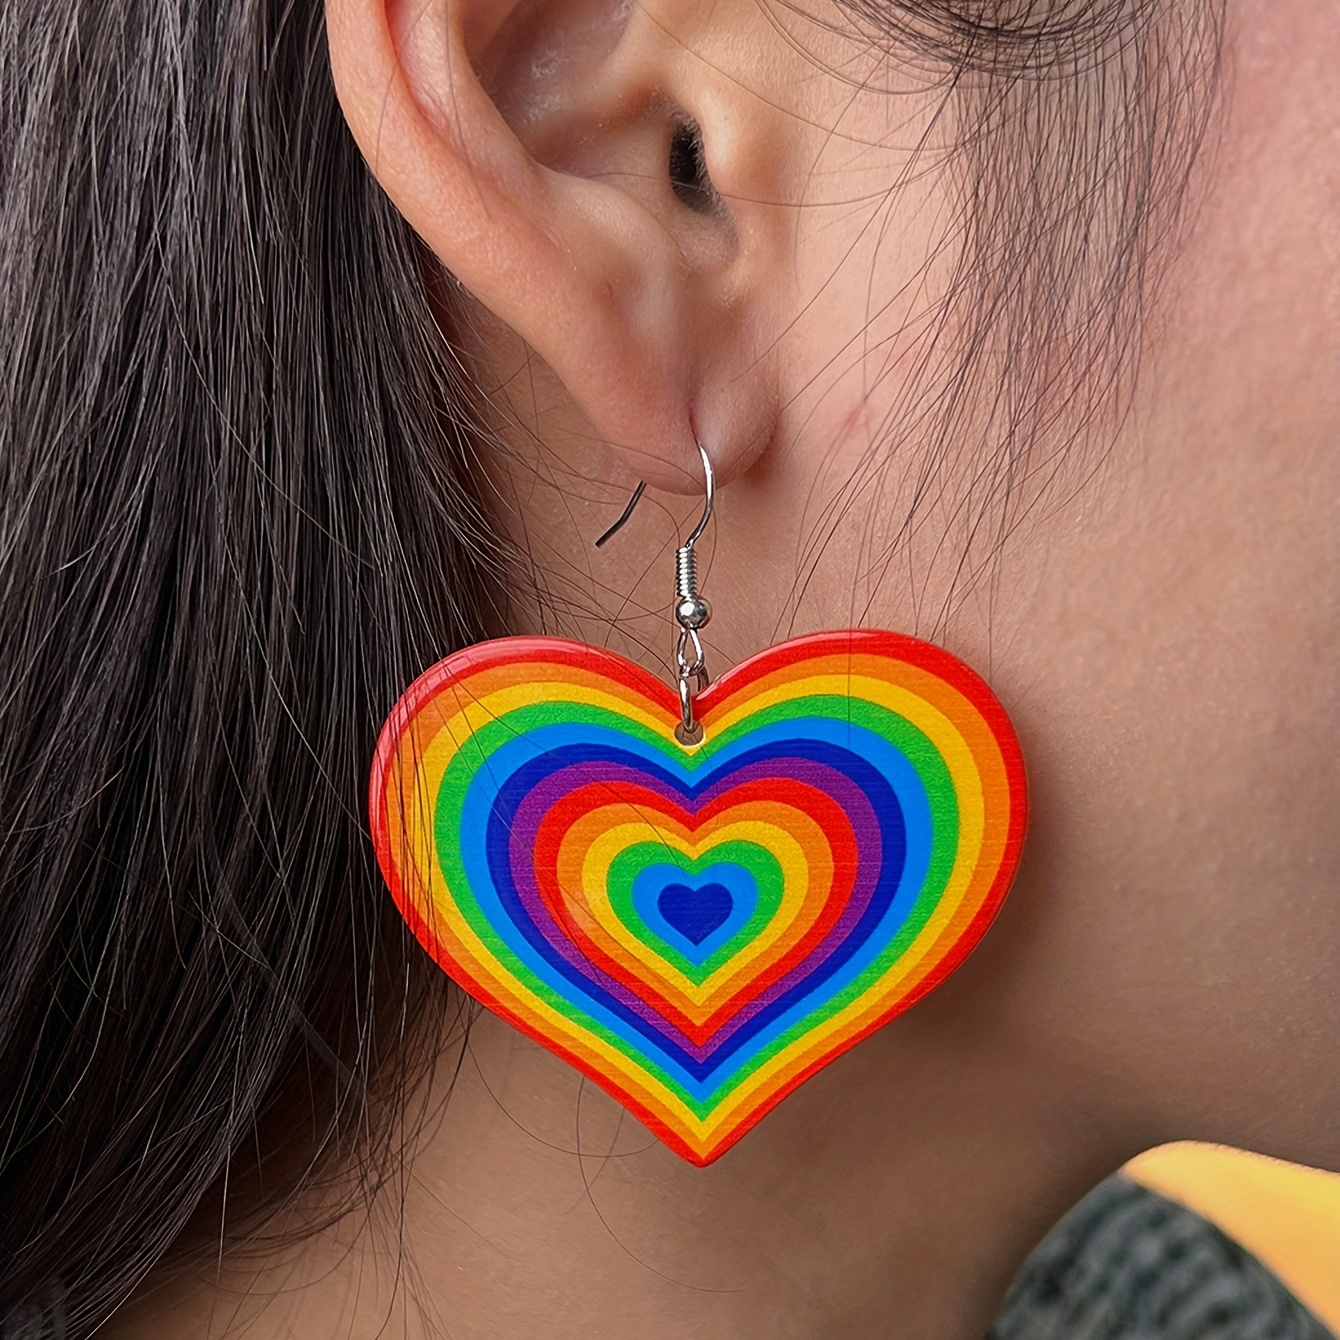 Buy Elegant Rhinestone Heart Shaped Dangle Earrings-Rainbow for Women  Online in India